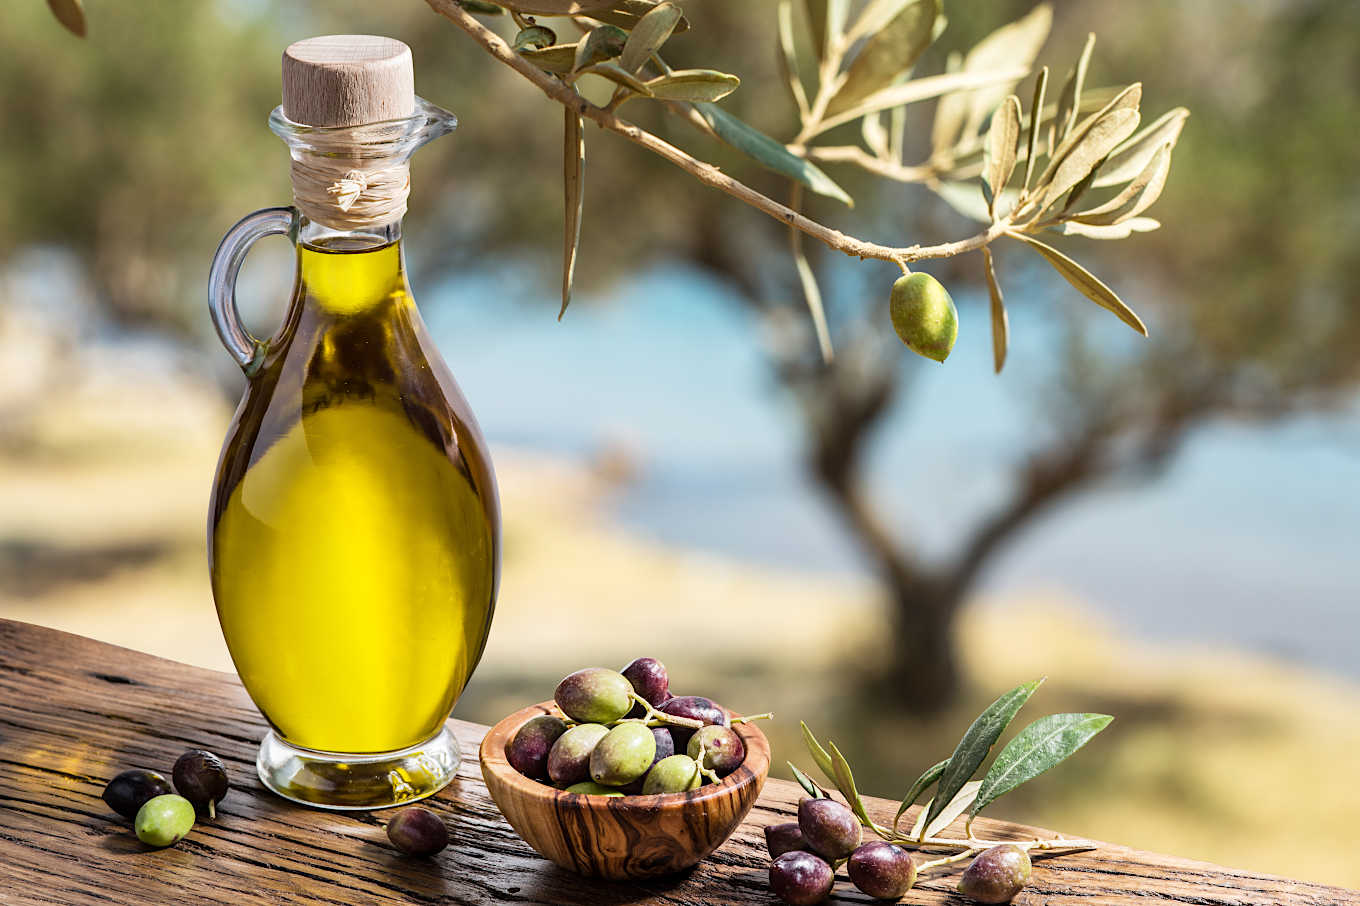 Organic Extra Virgin Olive Oil Premium Quality 100% Natural-almanaar Islamic Store